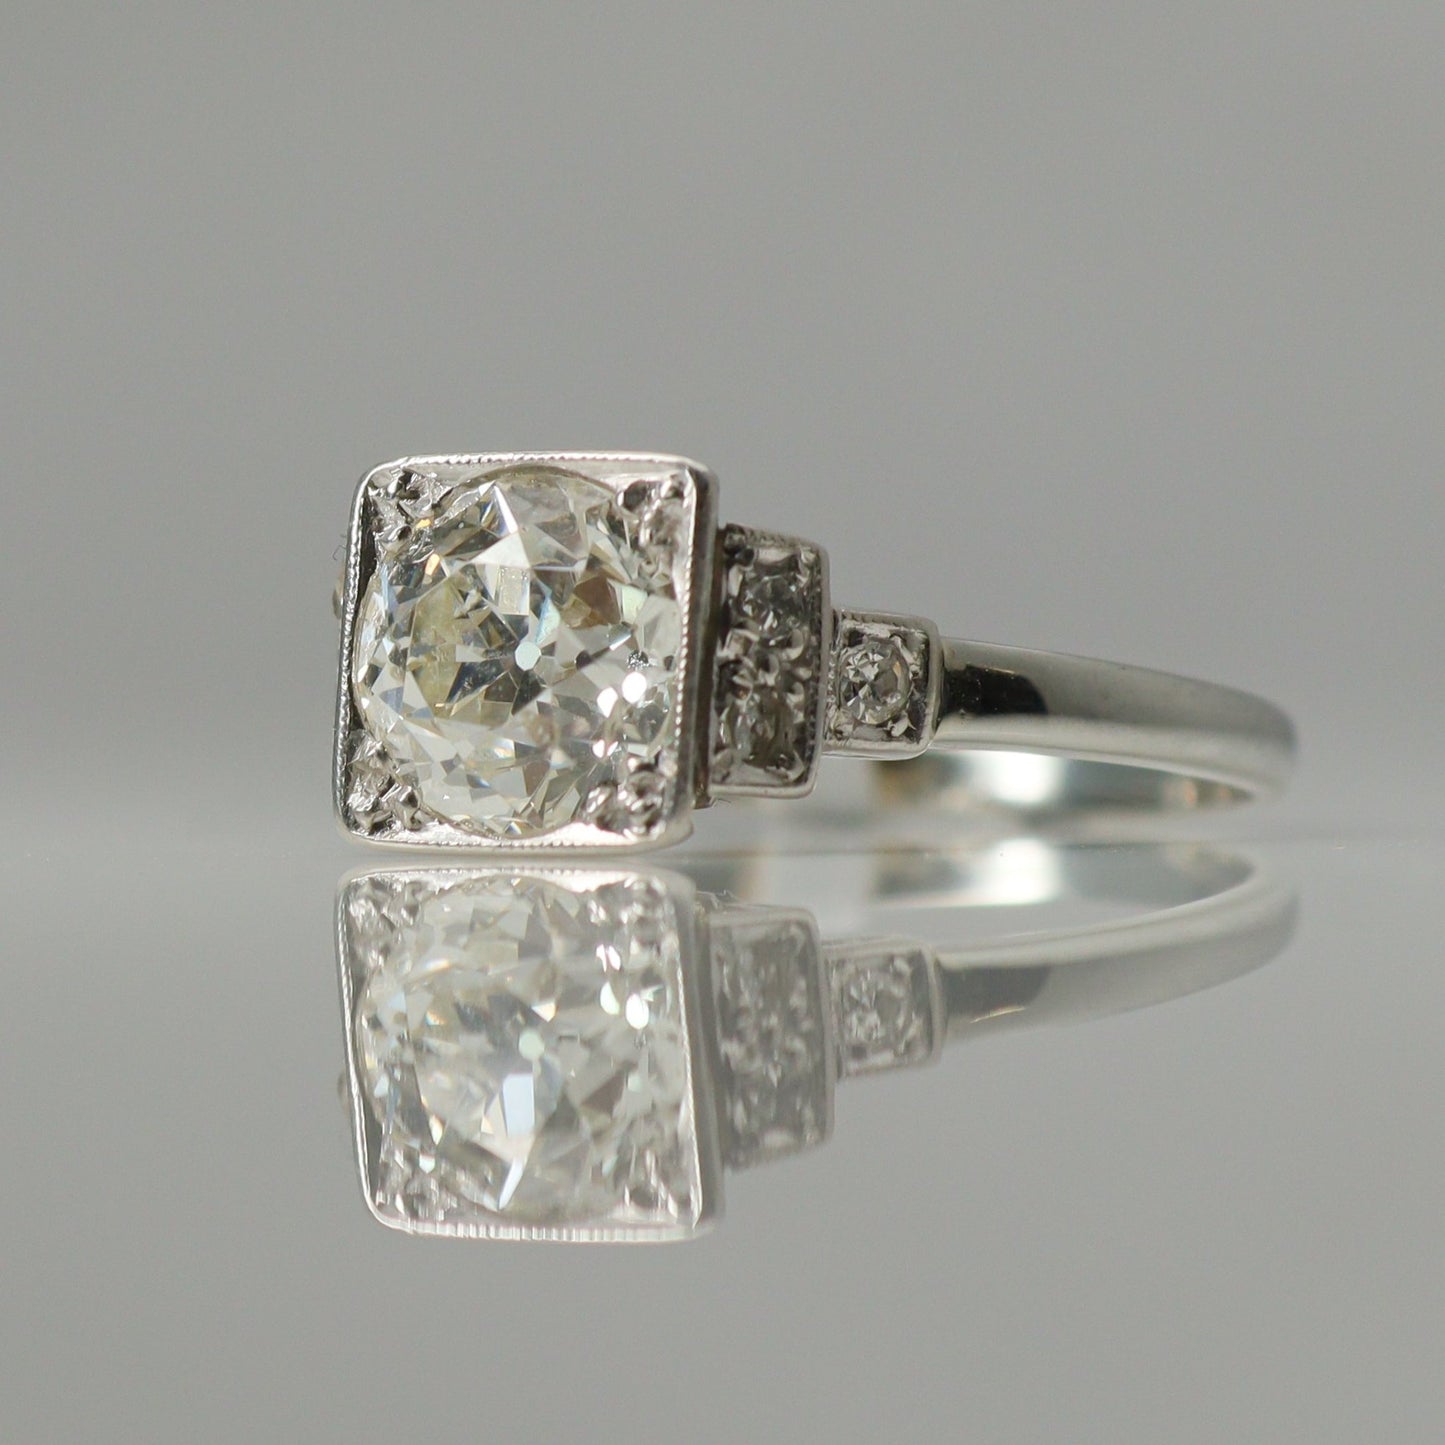 Art Deco Diamond Solitaire Ring - 1.40 carats - Friar House